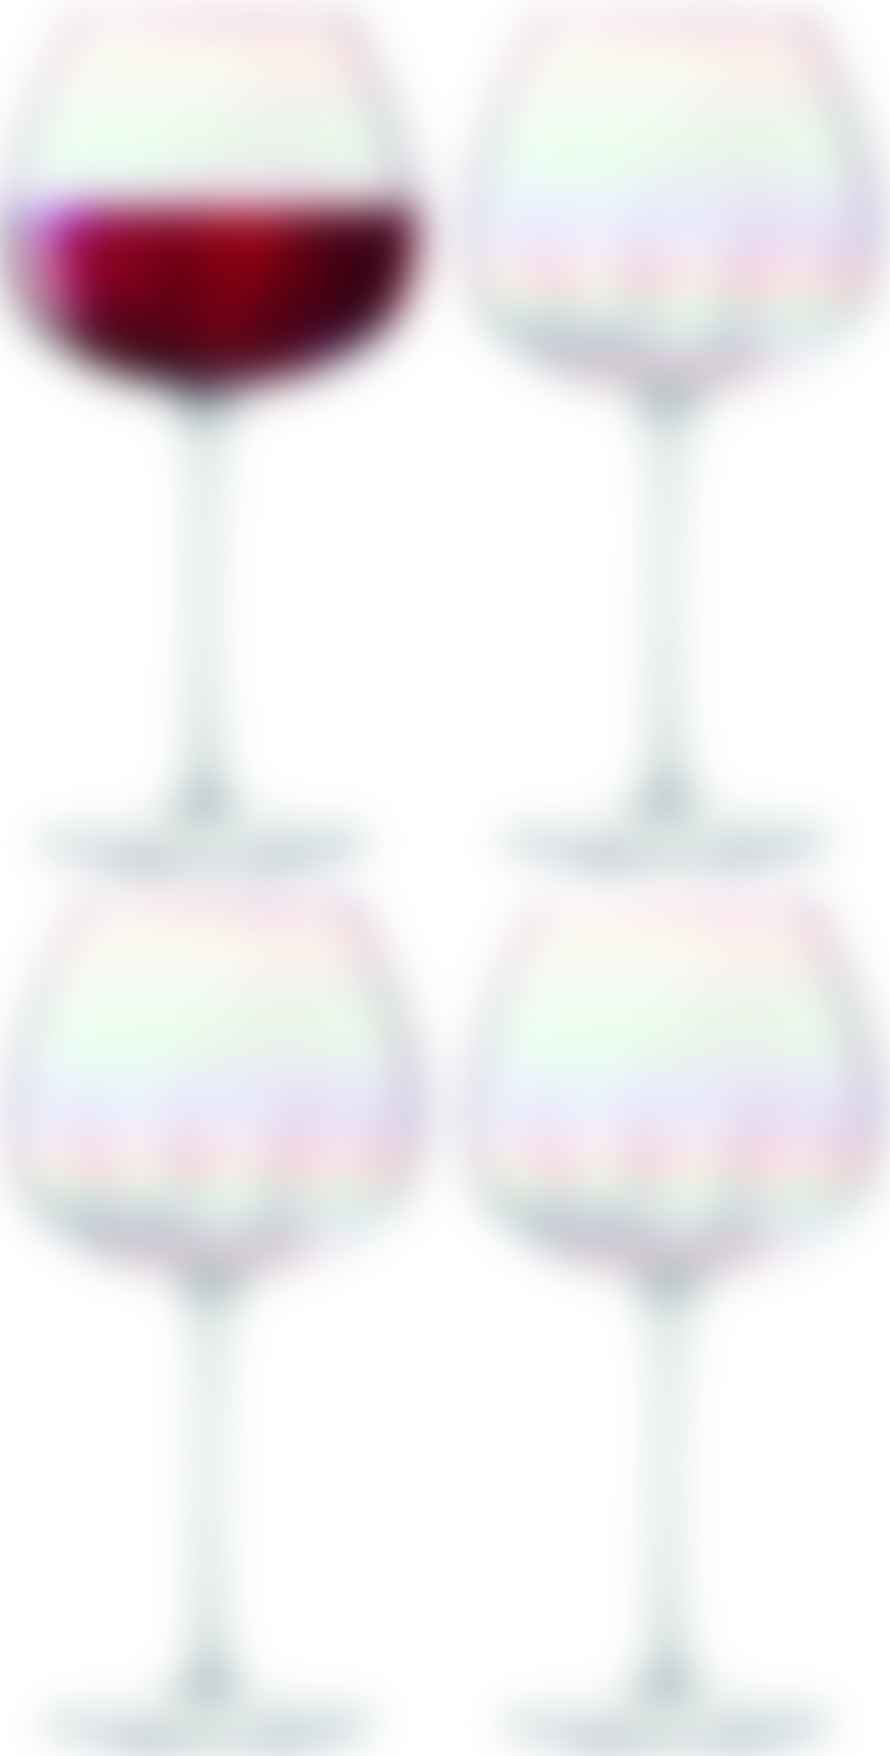 LSA International Pearl Wine Glass - Set of 4